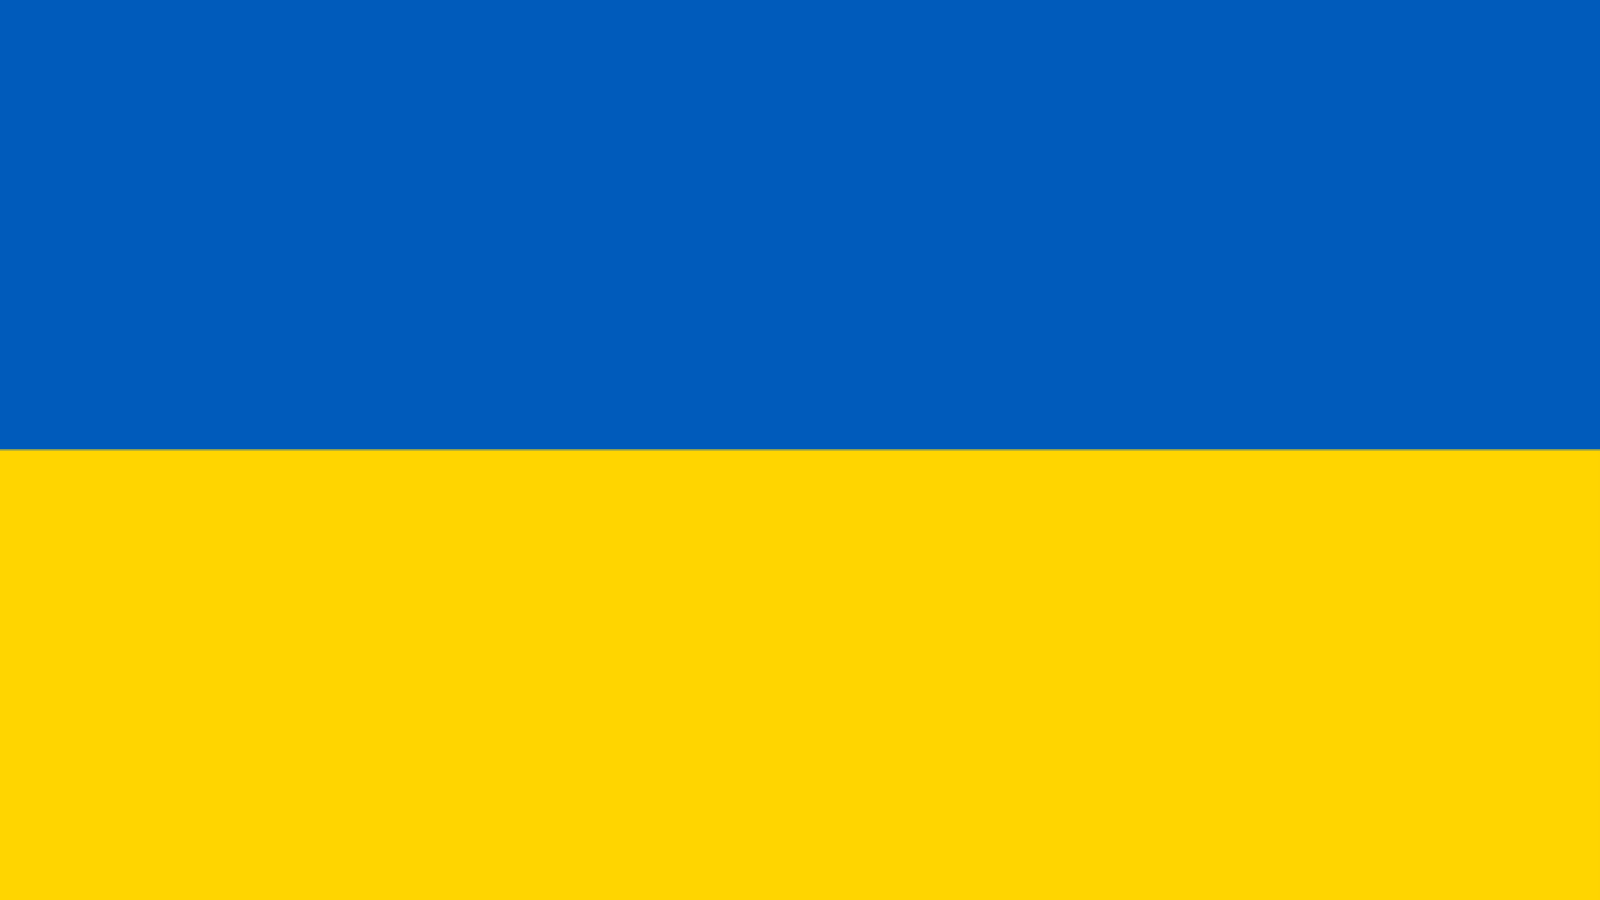 Flag of Ukraine (Blue stripe above yellow stripe)